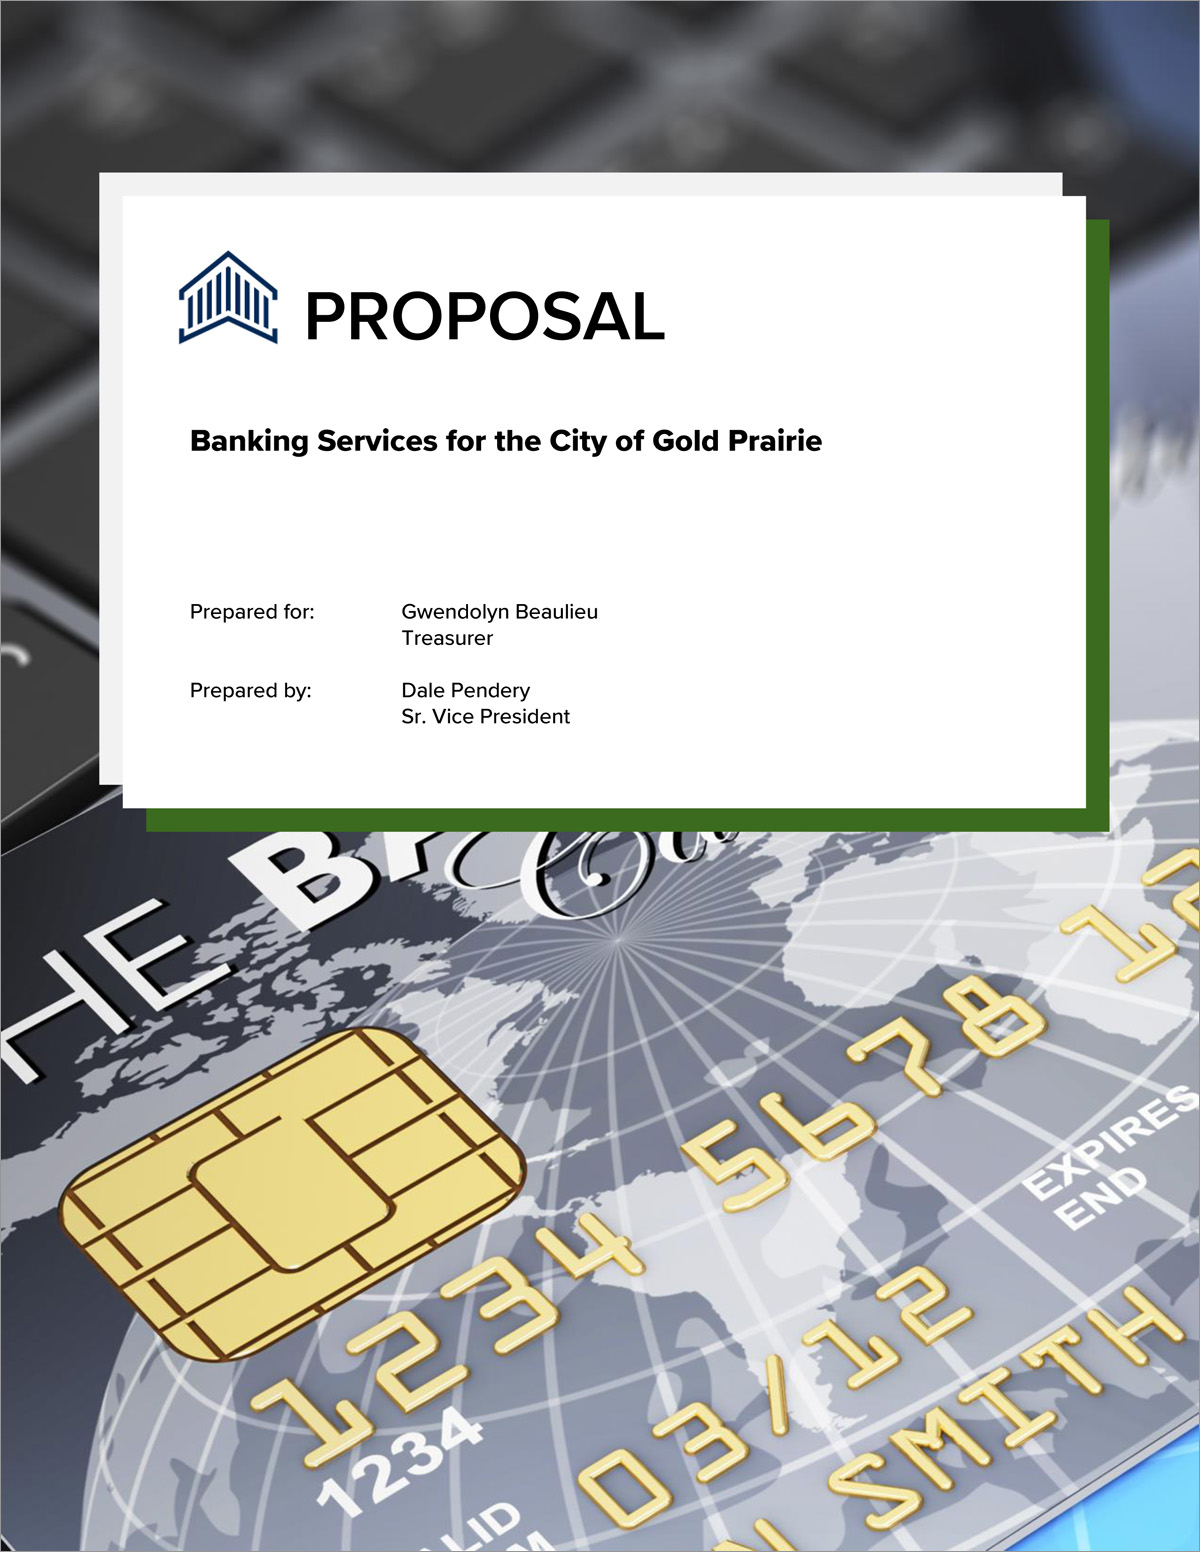 Banking Services Sample Proposal - 21 Steps